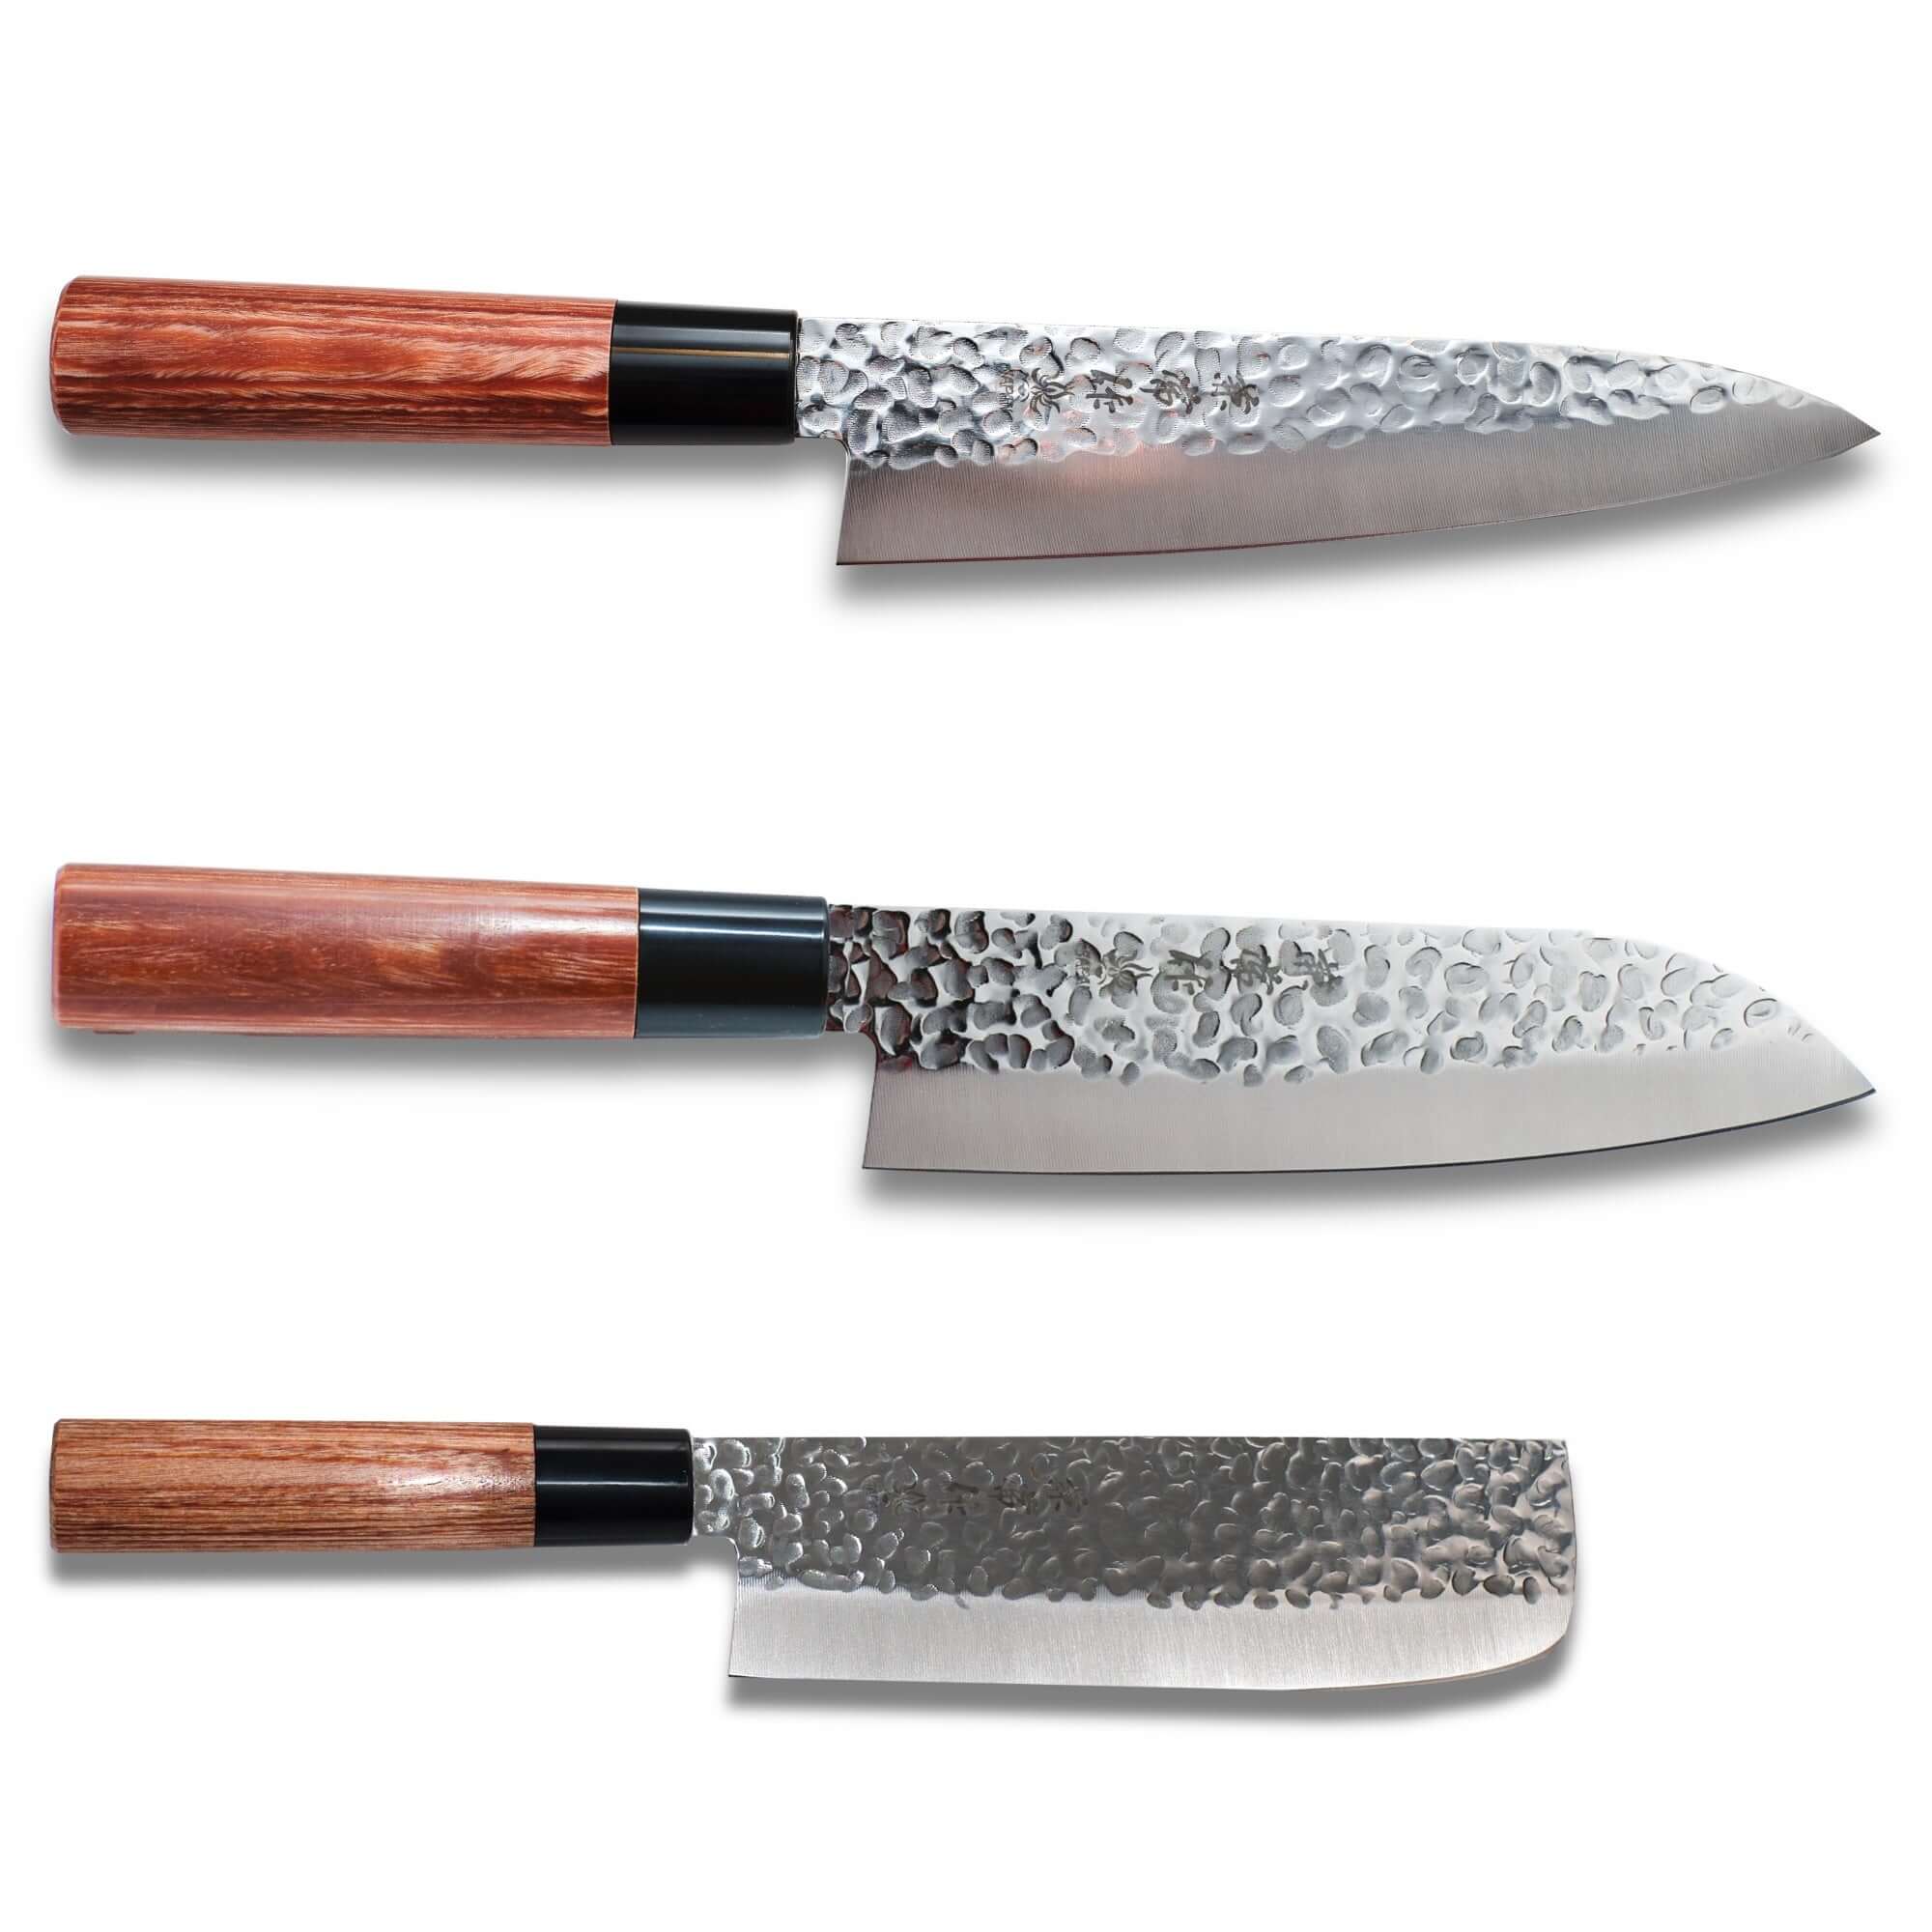 Japanese knife set canada, professional knife set, best knife set